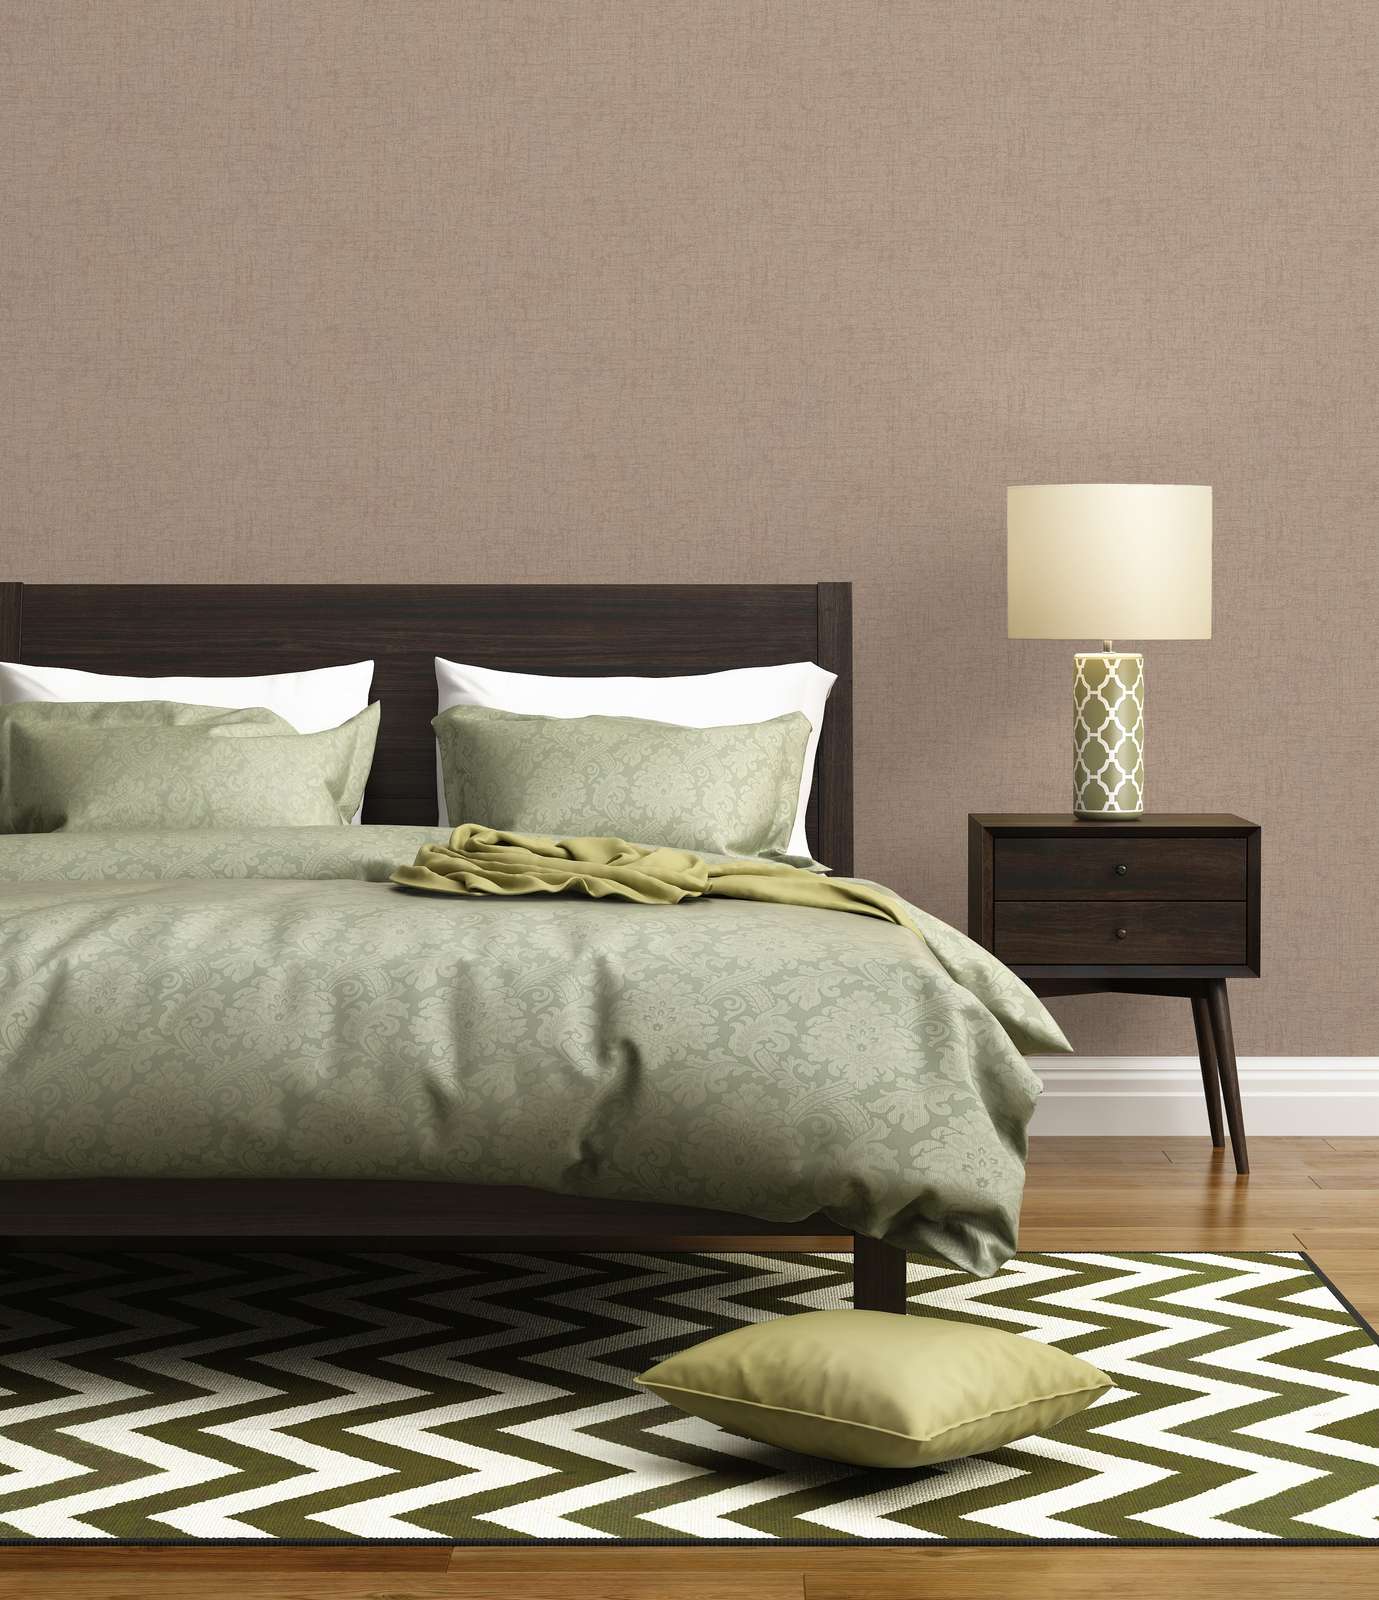             Textured non-woven wallpaper with a slight sheen - brown, beige
        